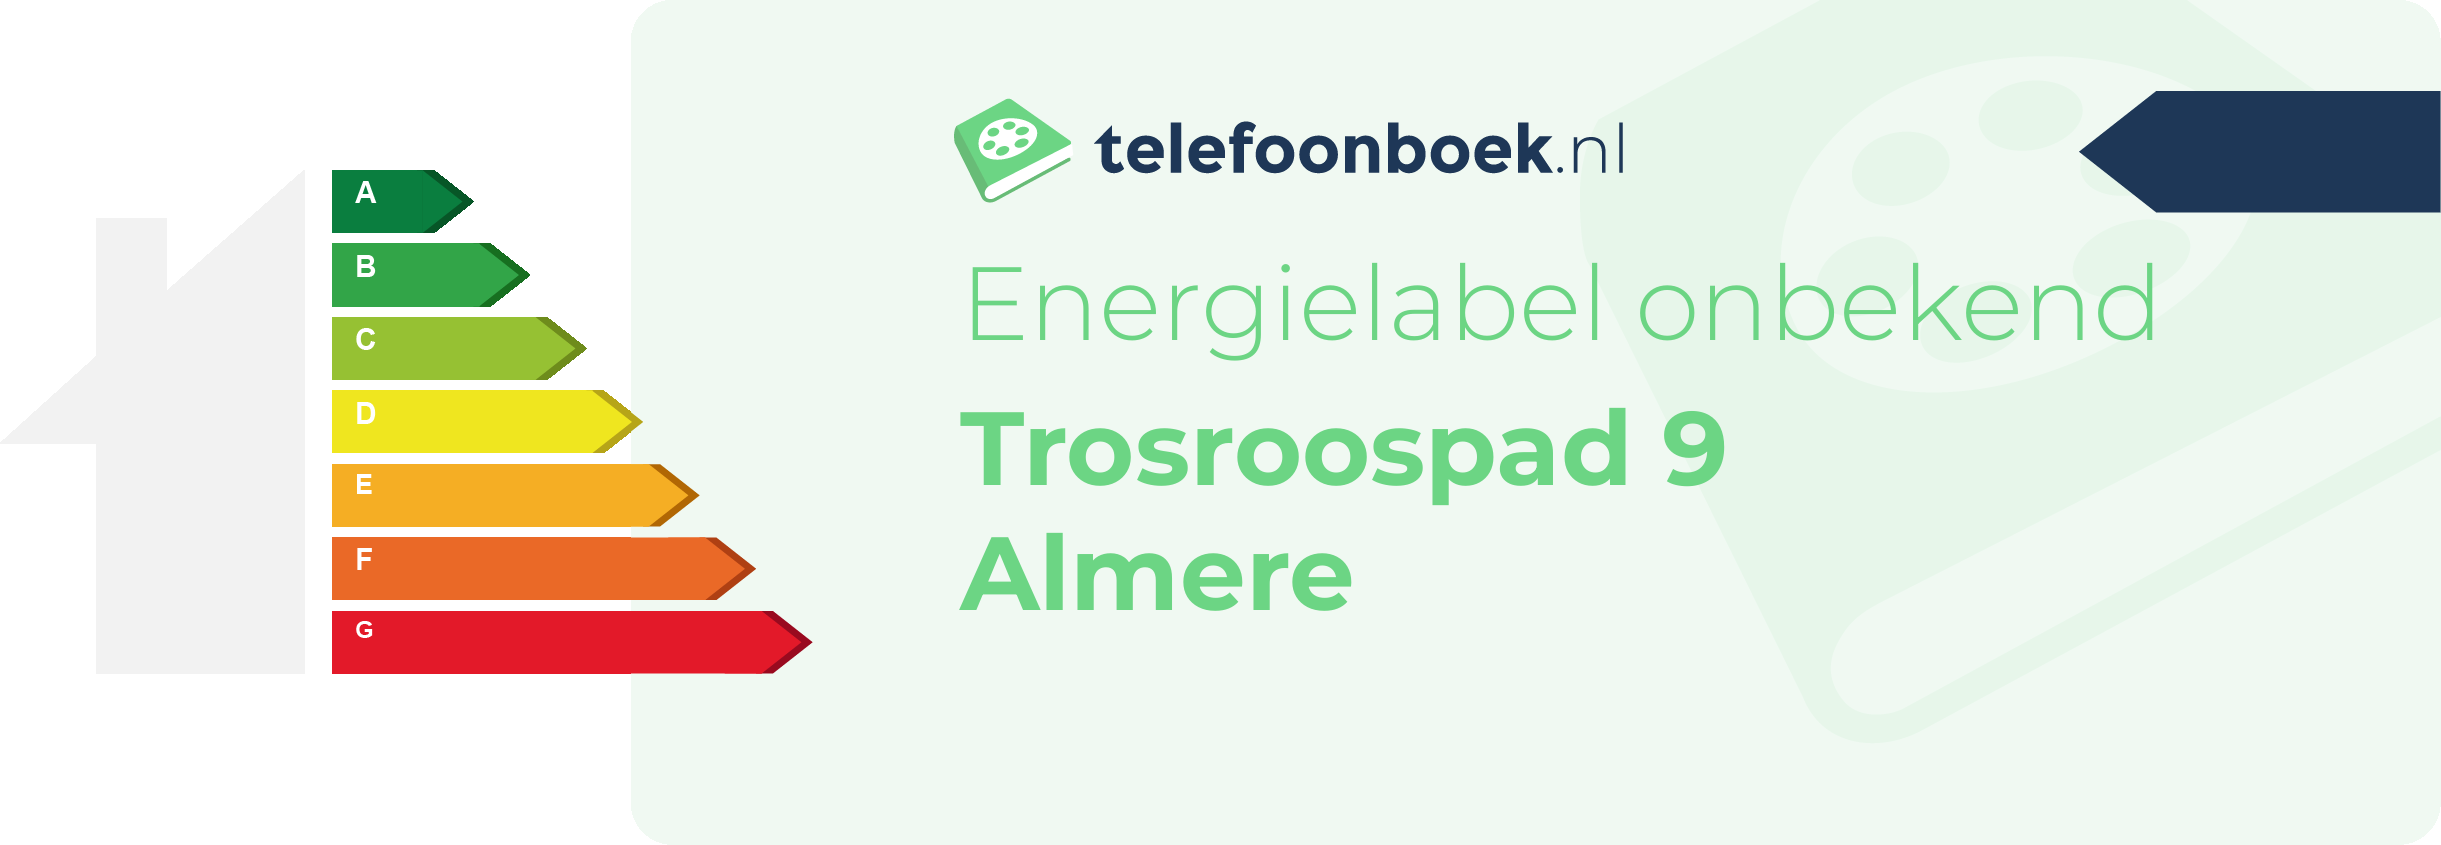 Energielabel Trosroospad 9 Almere